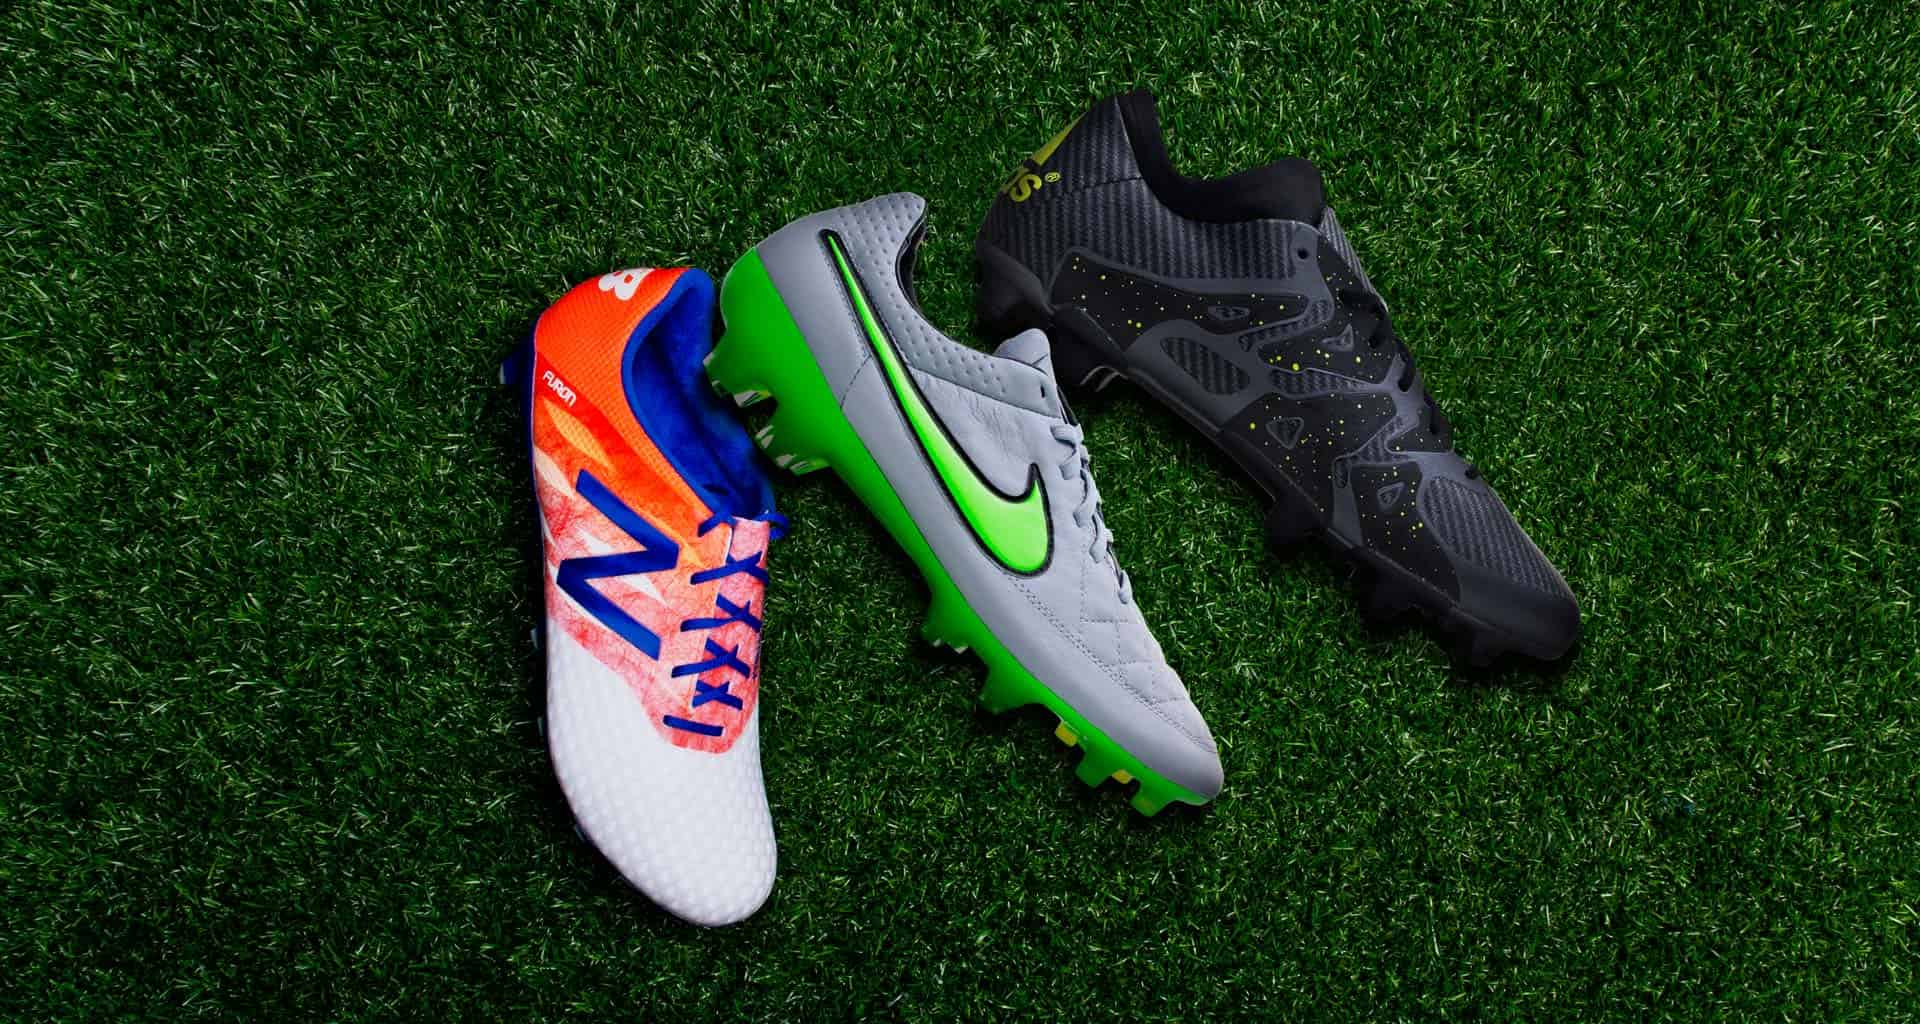 botas de futbol ofertas online